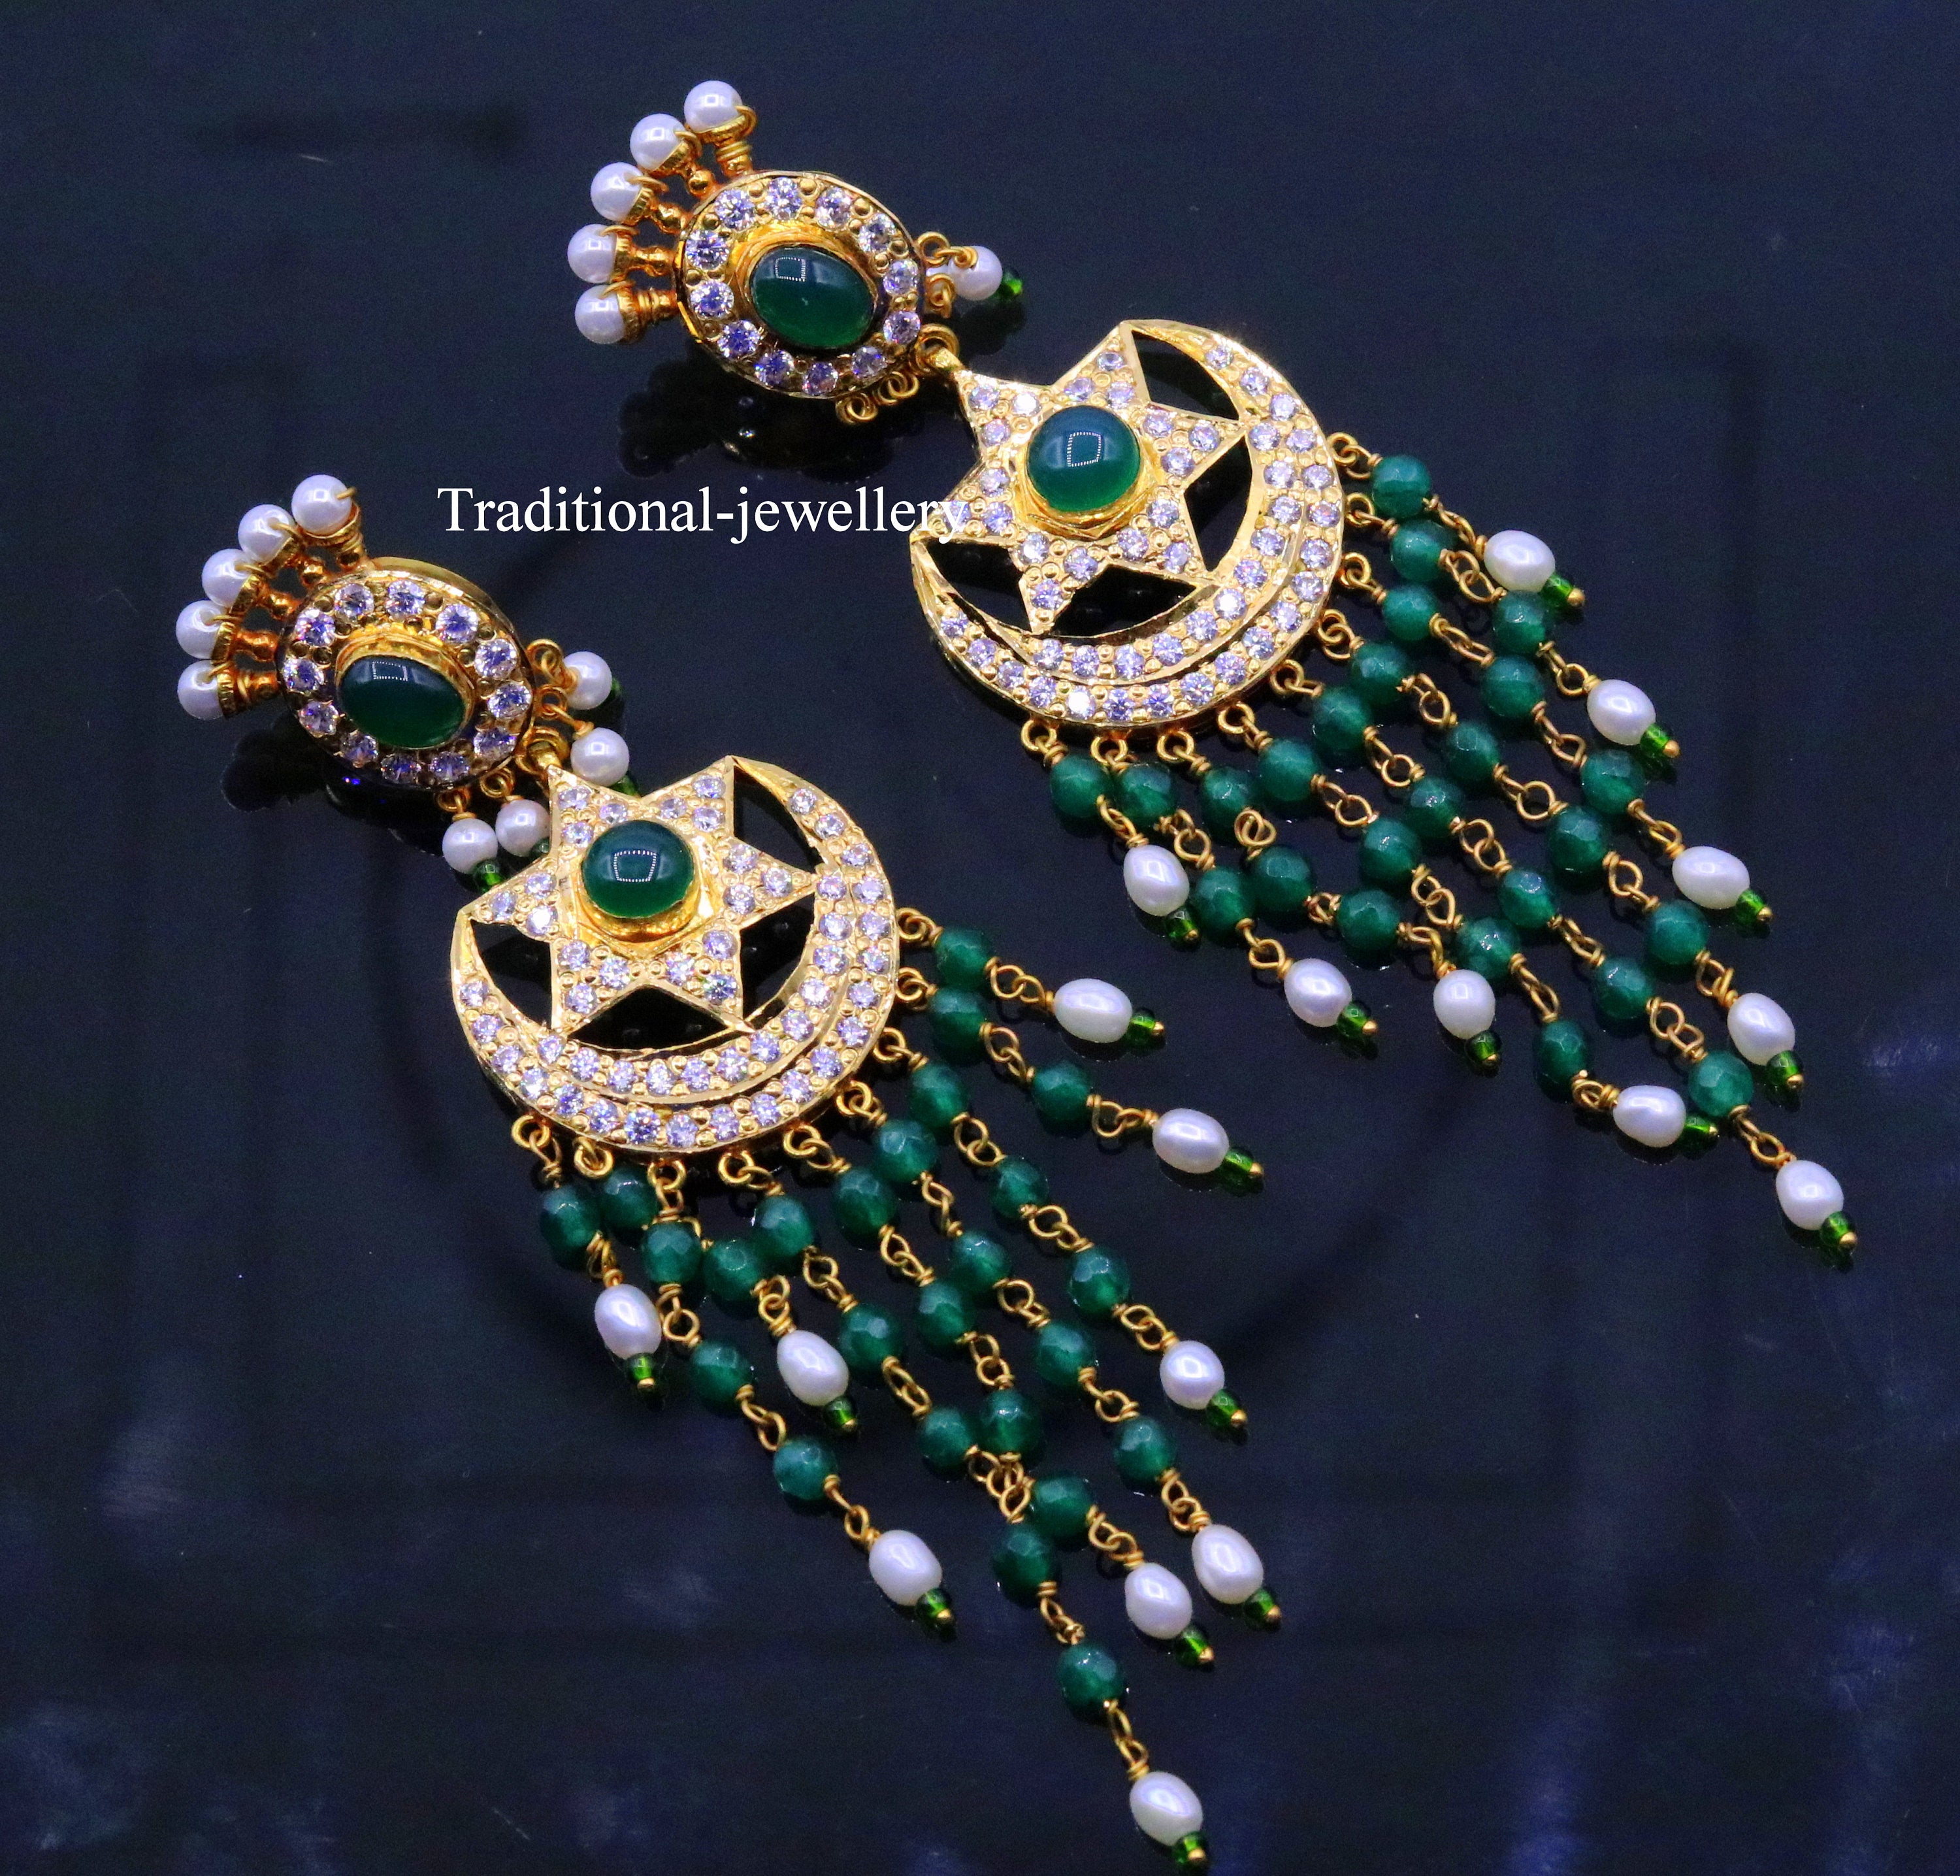 Tops Rajputi Gold Earrings at Rs 140000/piece in Jaipur | ID: 23003253855